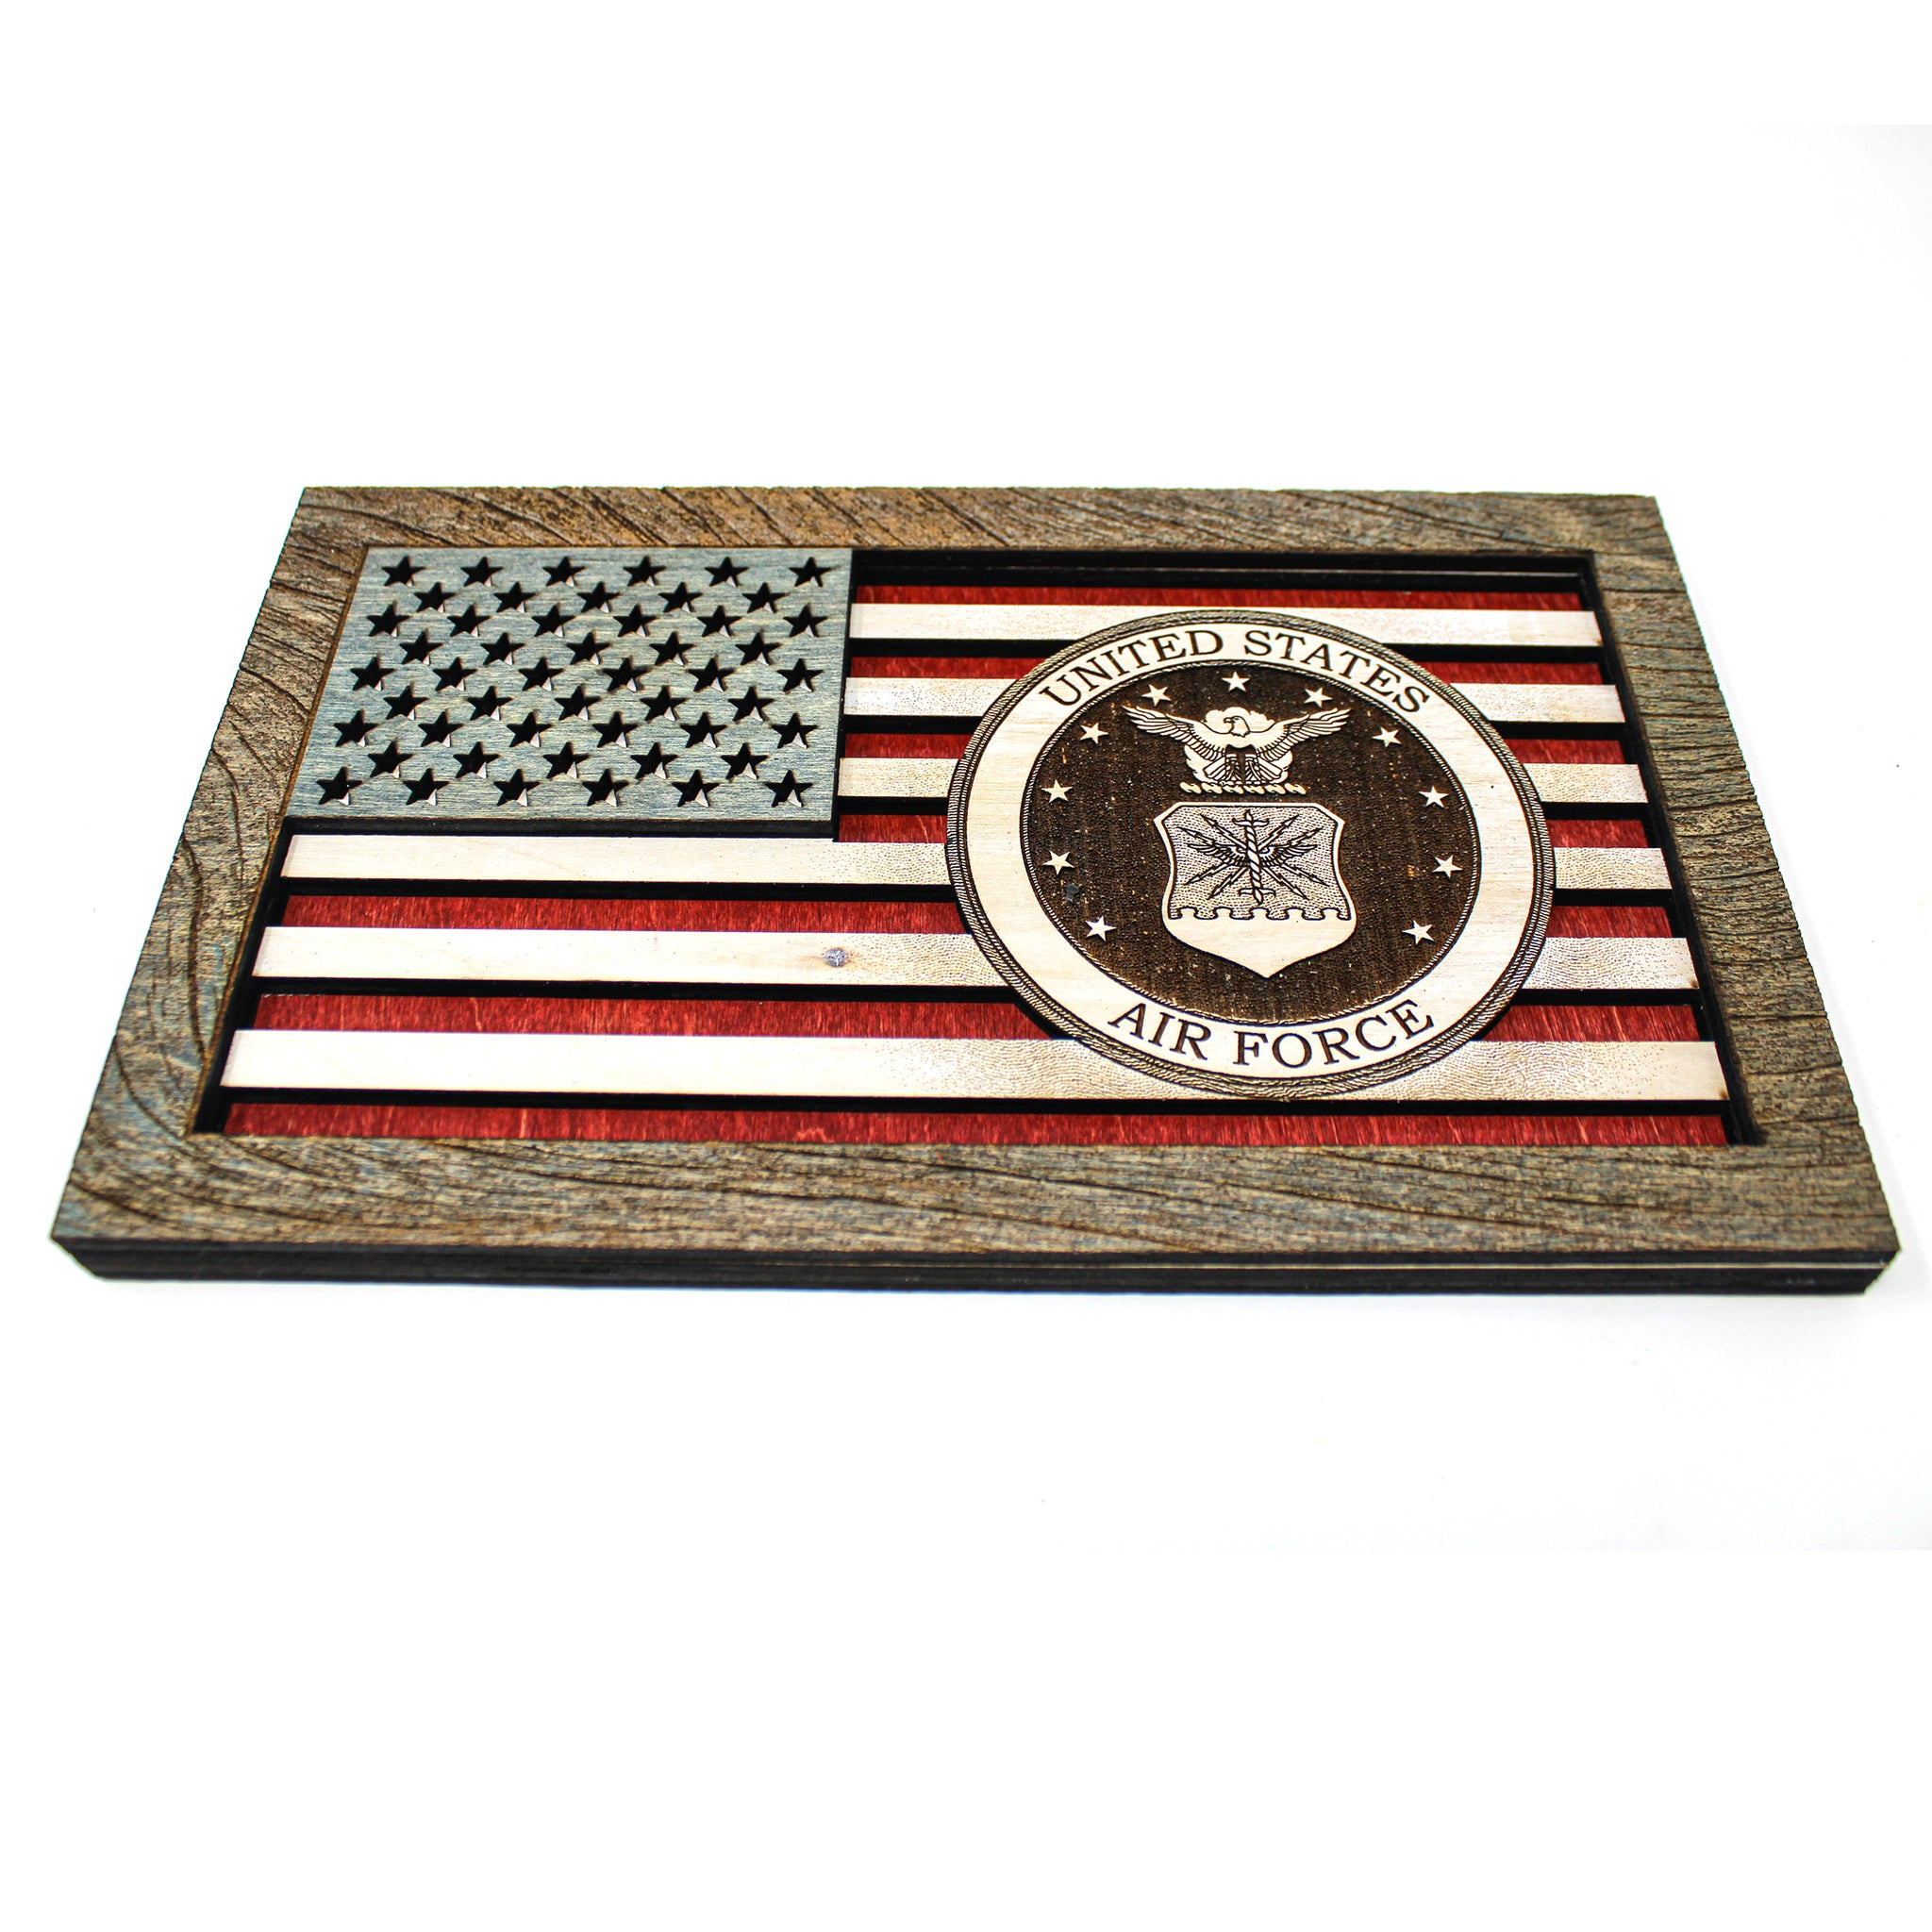 3D Wood Wall Art - Air Force Seal American Flag